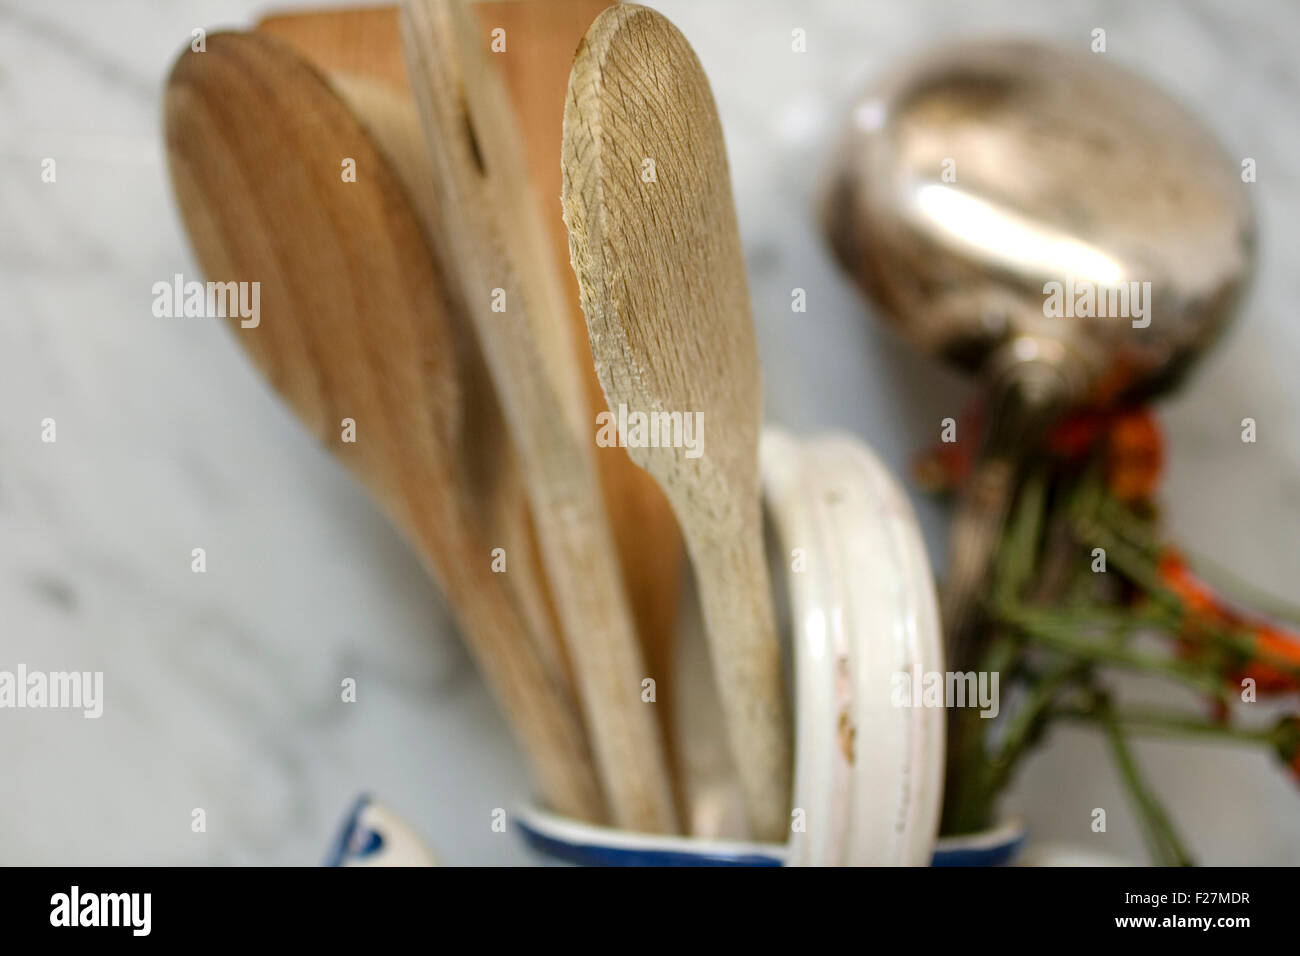 Wooden ladles insider a ceramic anphora Stock Photo